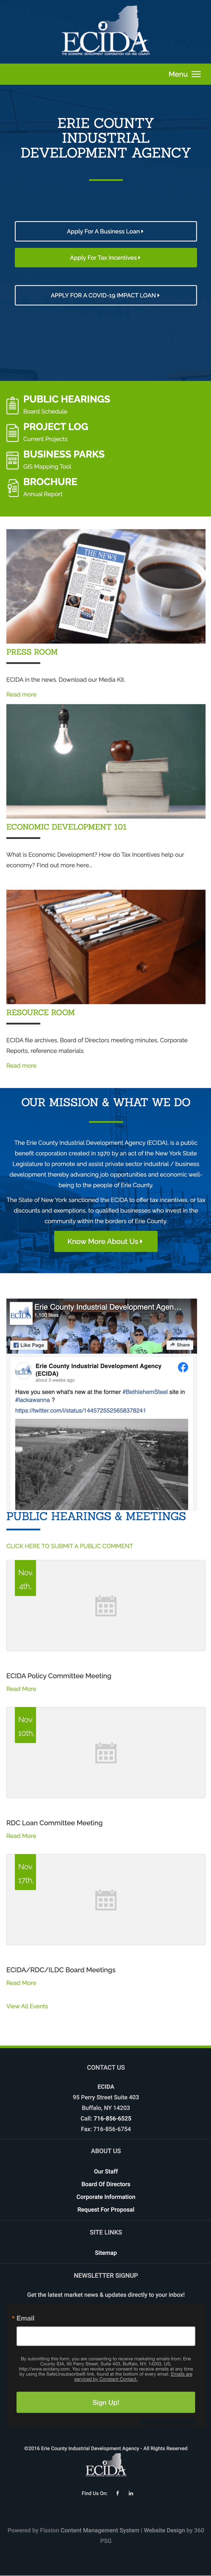 ECIDA Website - Mobile